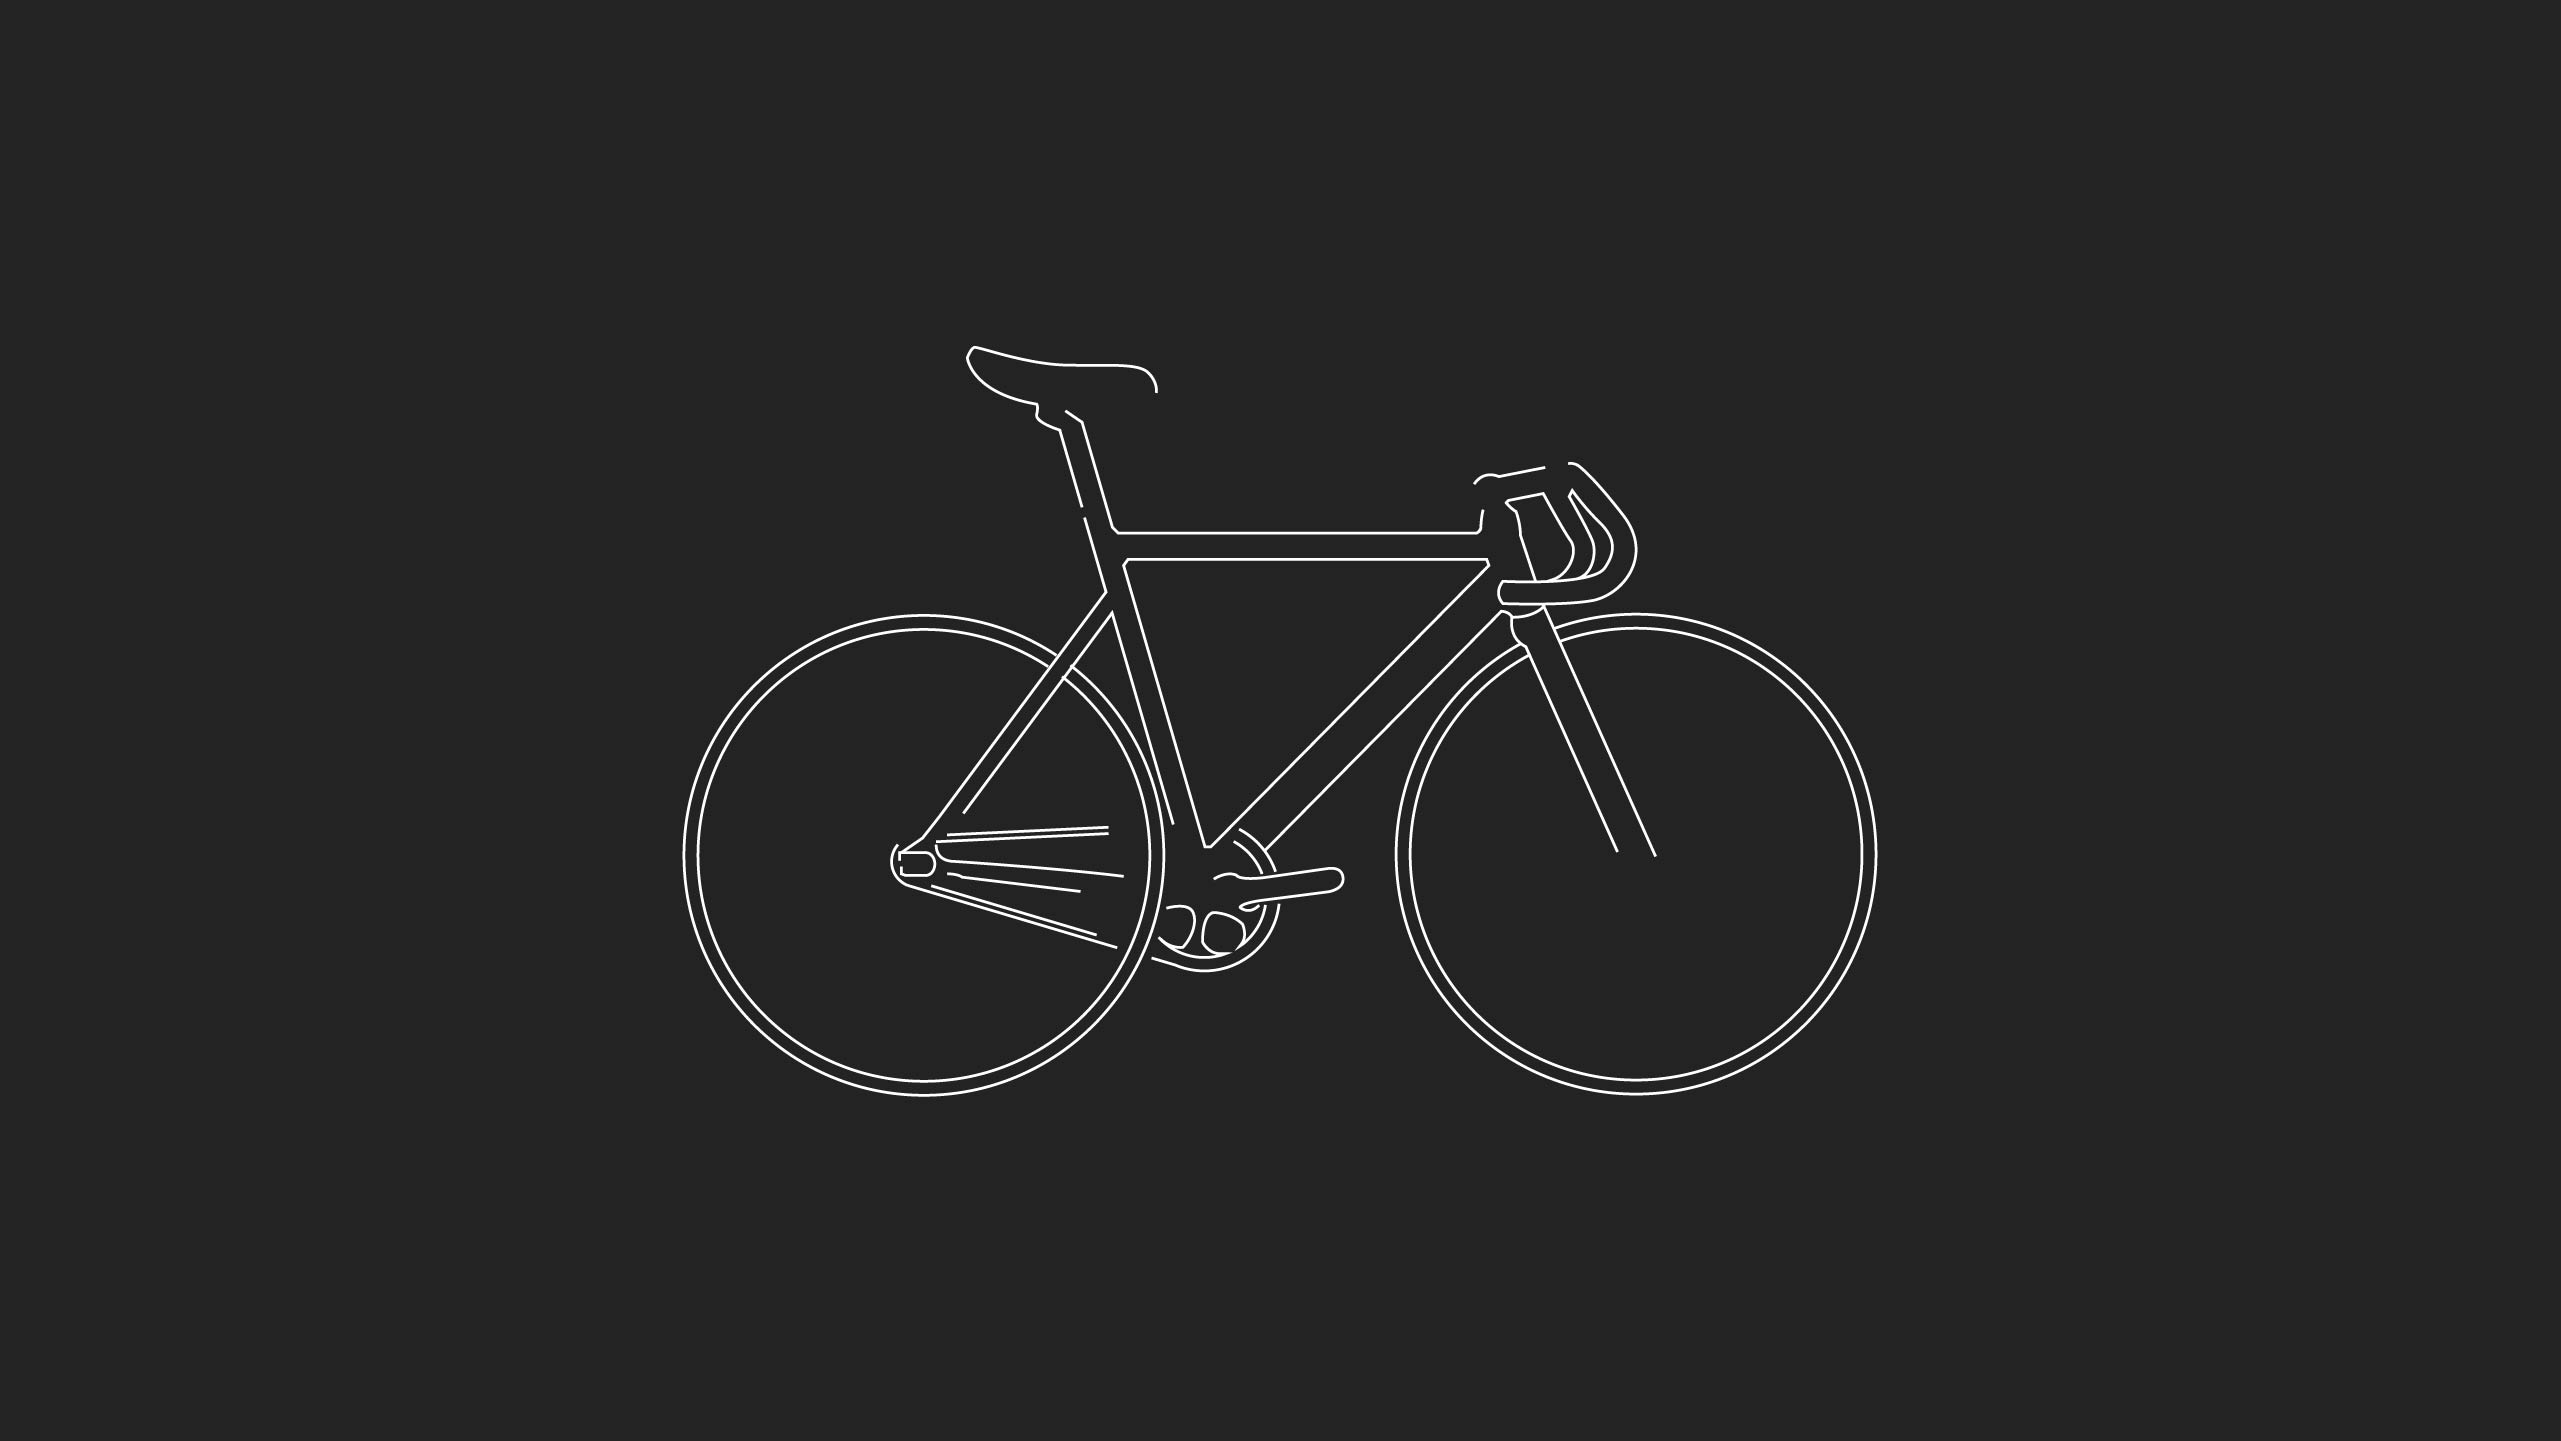 Fixed gear bike wallpaper - Imgur